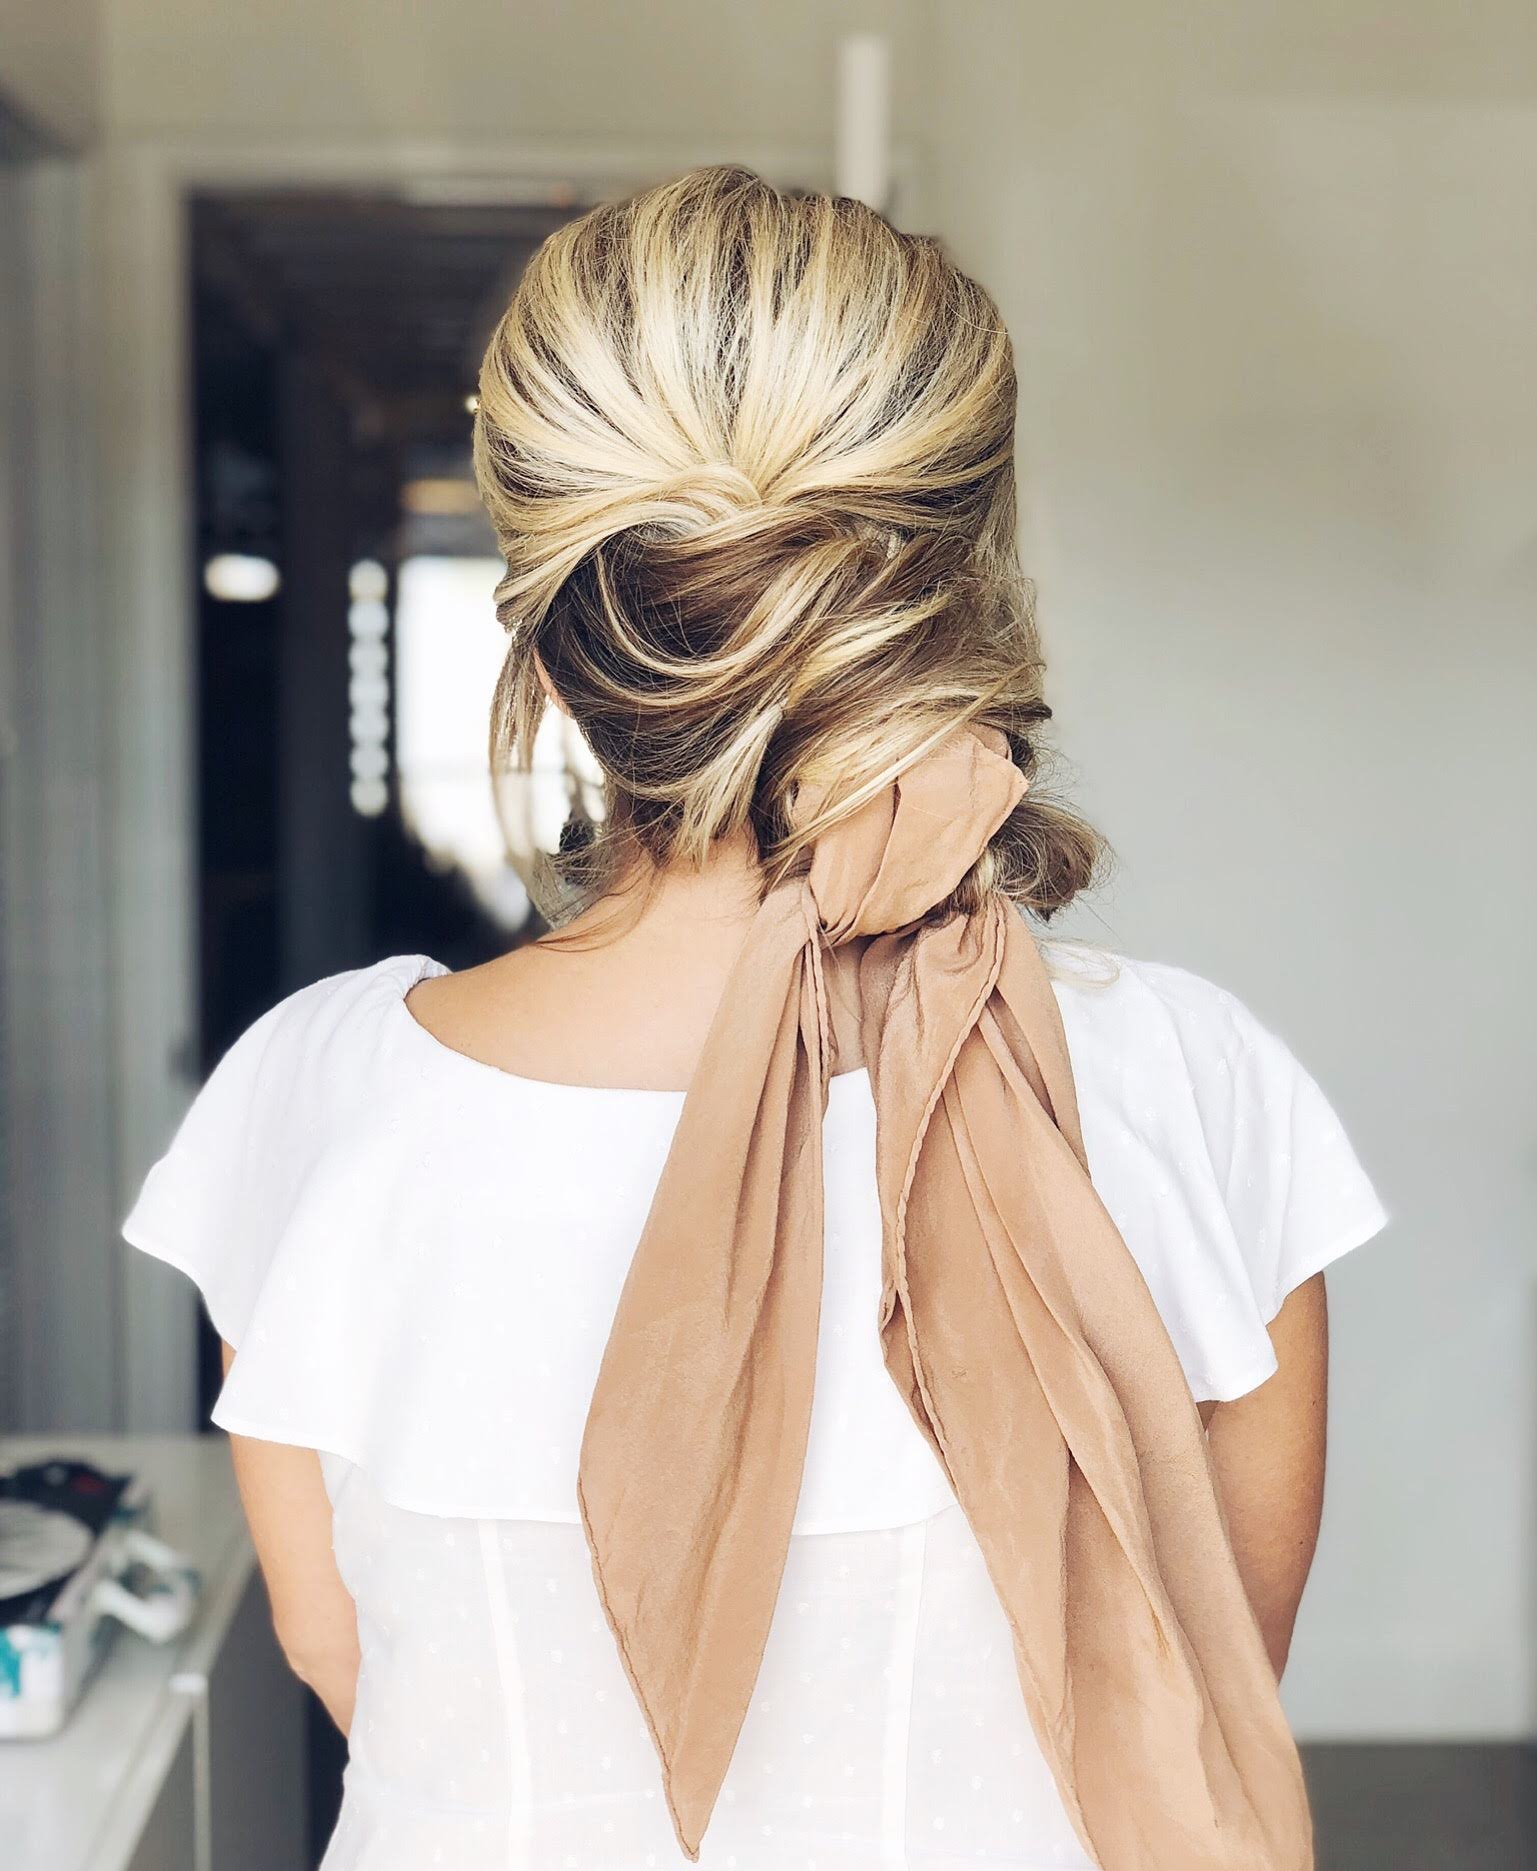 Your Beauty Invite – 8 Easy Holiday Hair Tutorials